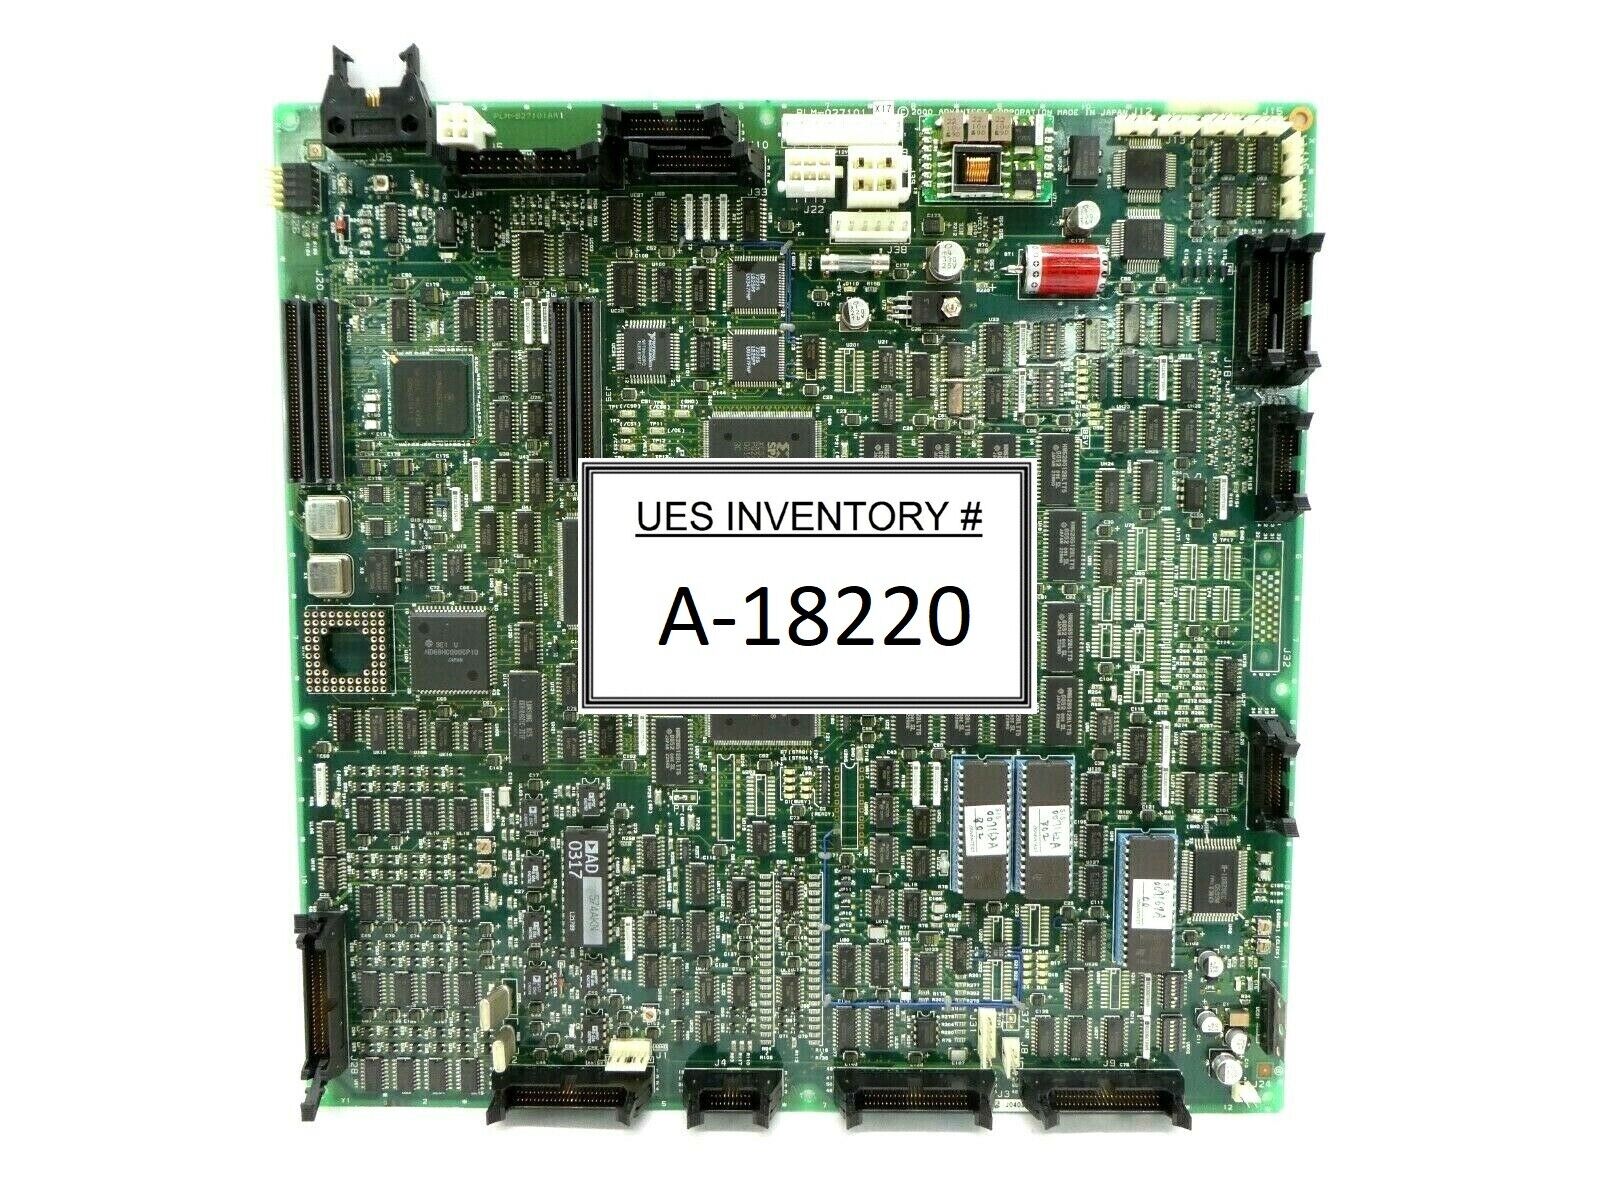 Advantest BLM-027101 Motherboard PCB X17 PLM-827101AA1 DEF03-3R0P 007167A Spare